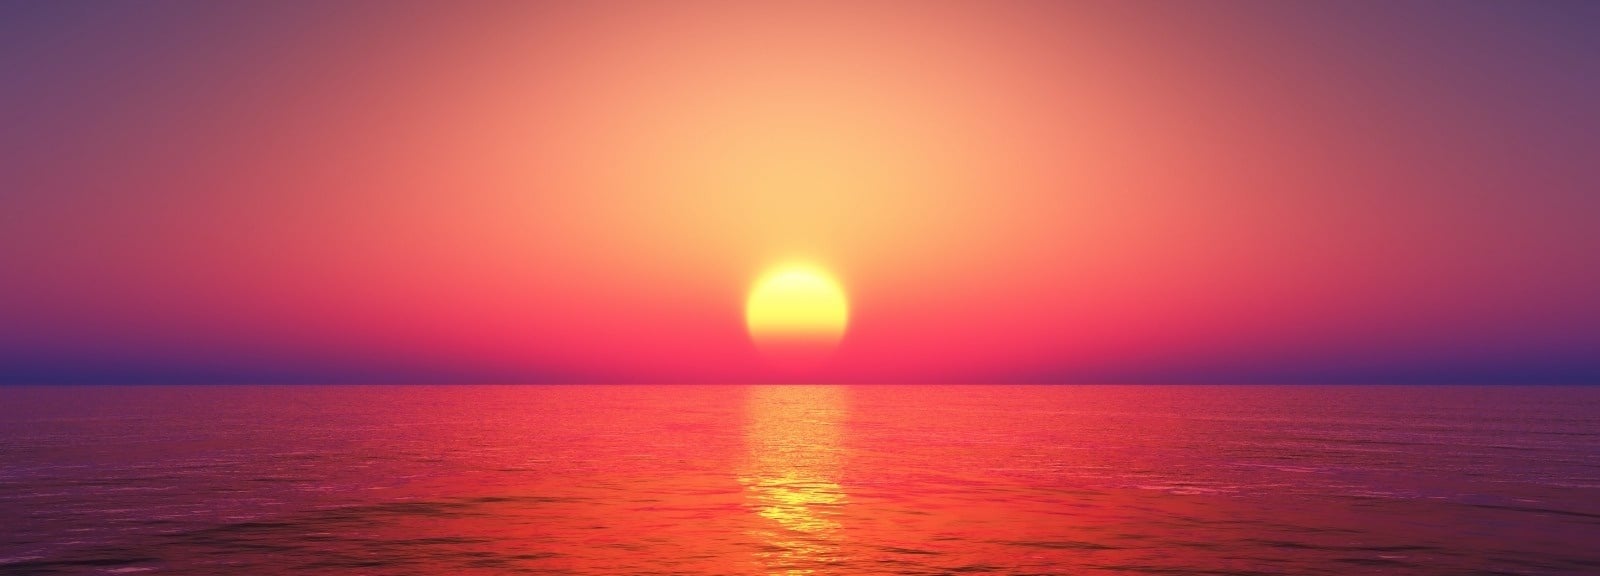 Belo pôr do sol de tons laranja, rosa, roxo e azul sobre o mar